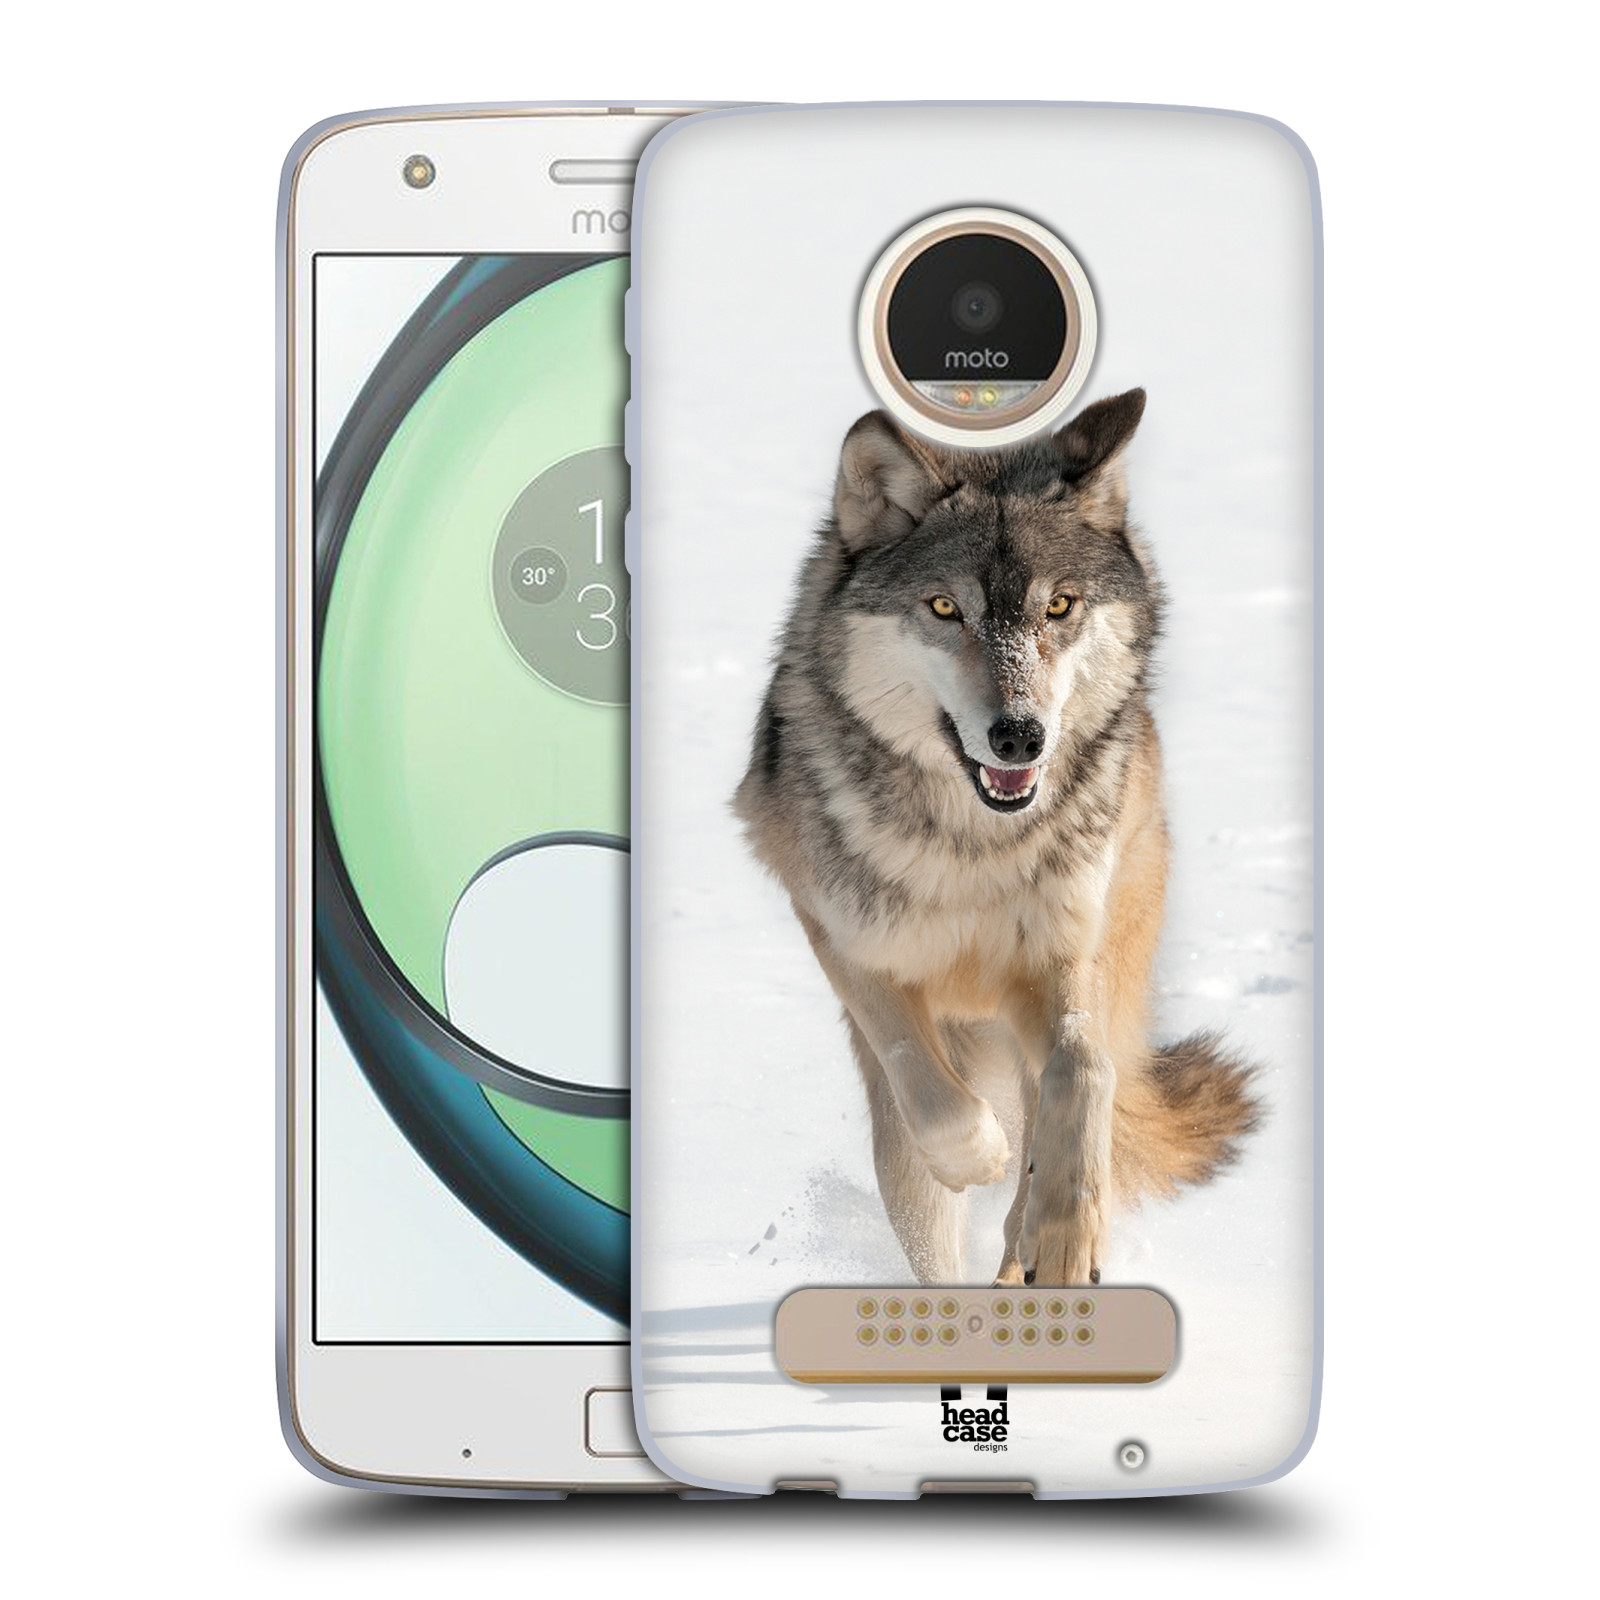 HEAD CASE silikonový obal na mobil Lenovo Moto Z Play vzor Divočina, Divoký život a zvířata foto BĚŽÍCÍ VLK